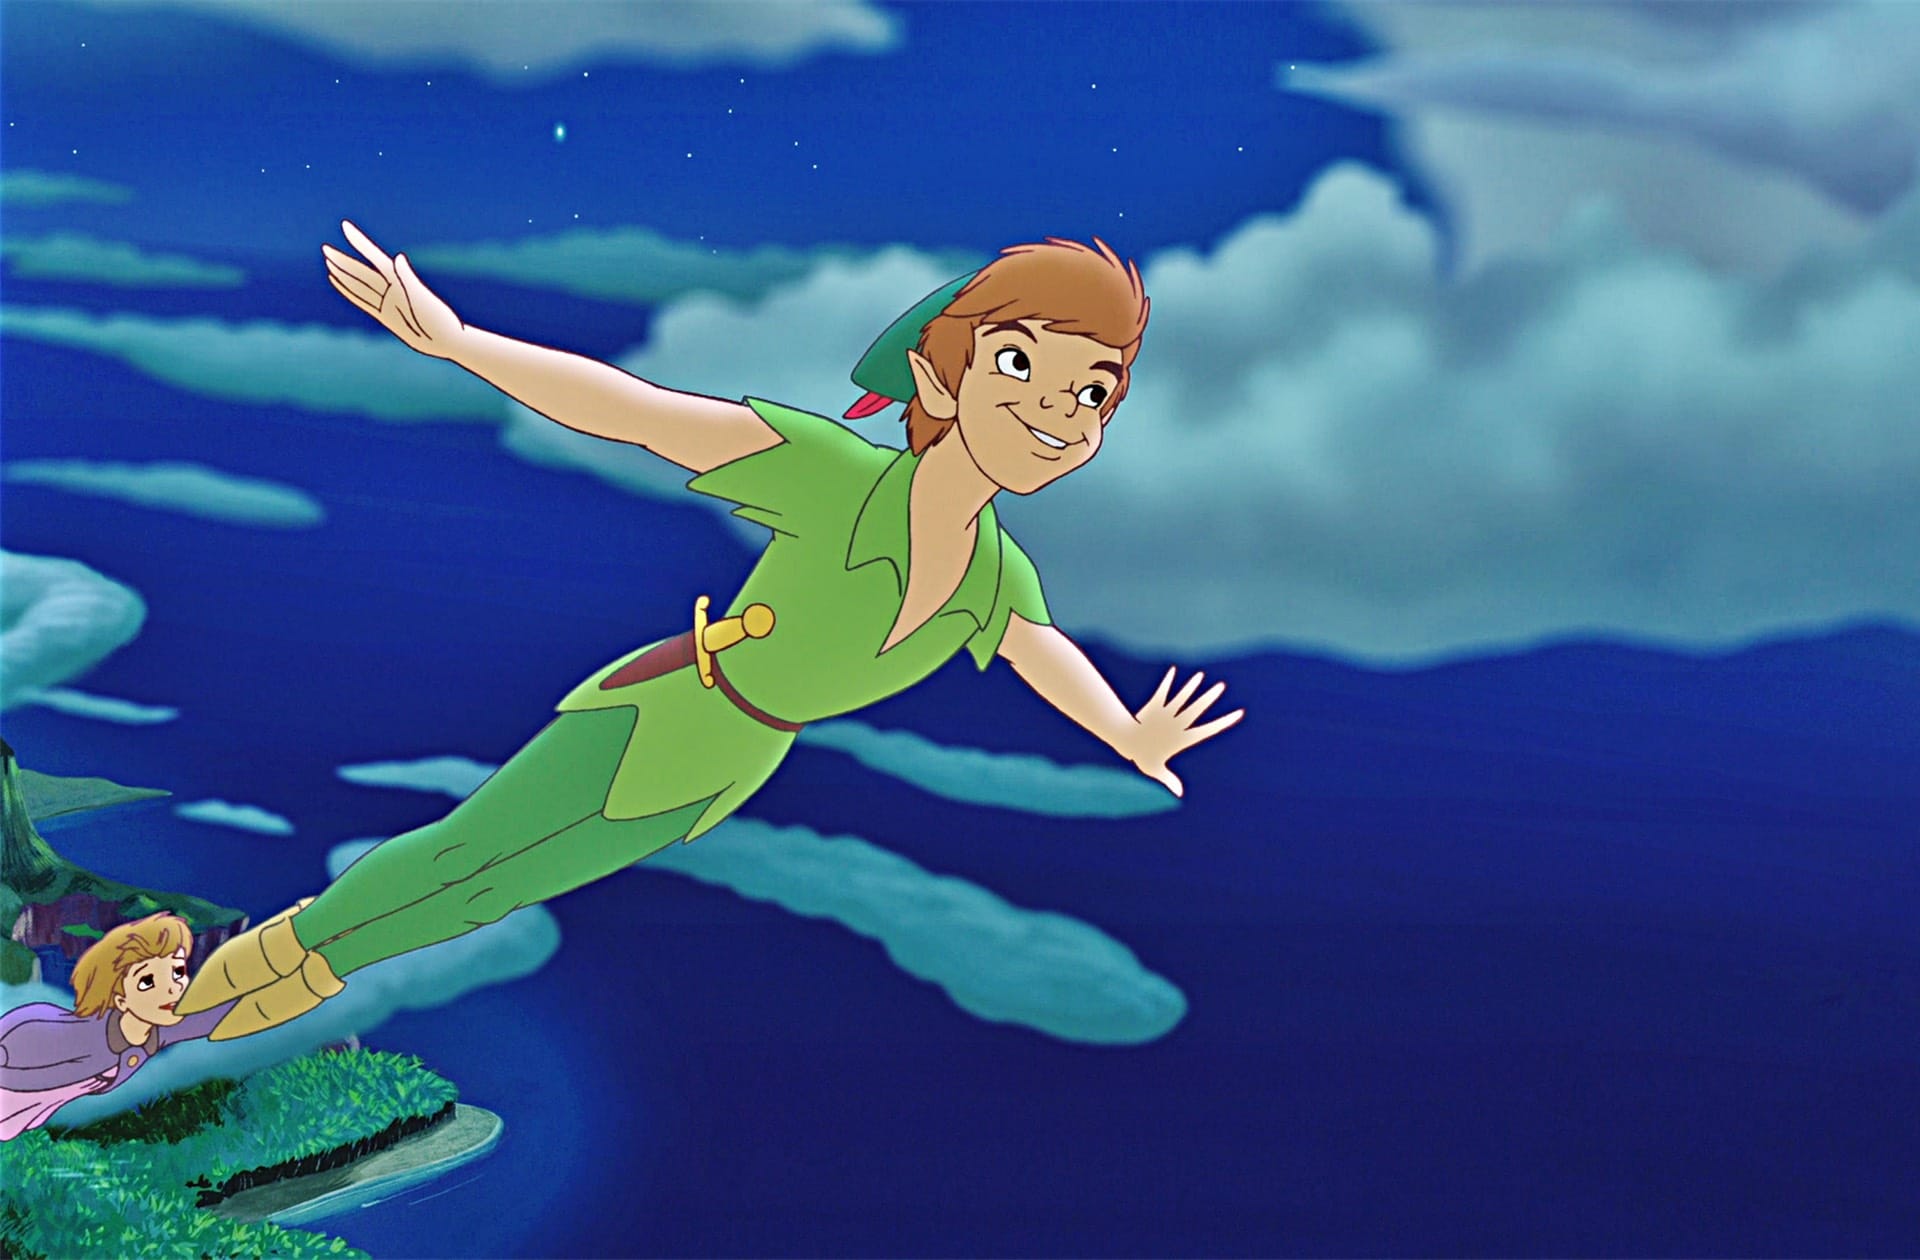 Peter Pan // Source : Disney